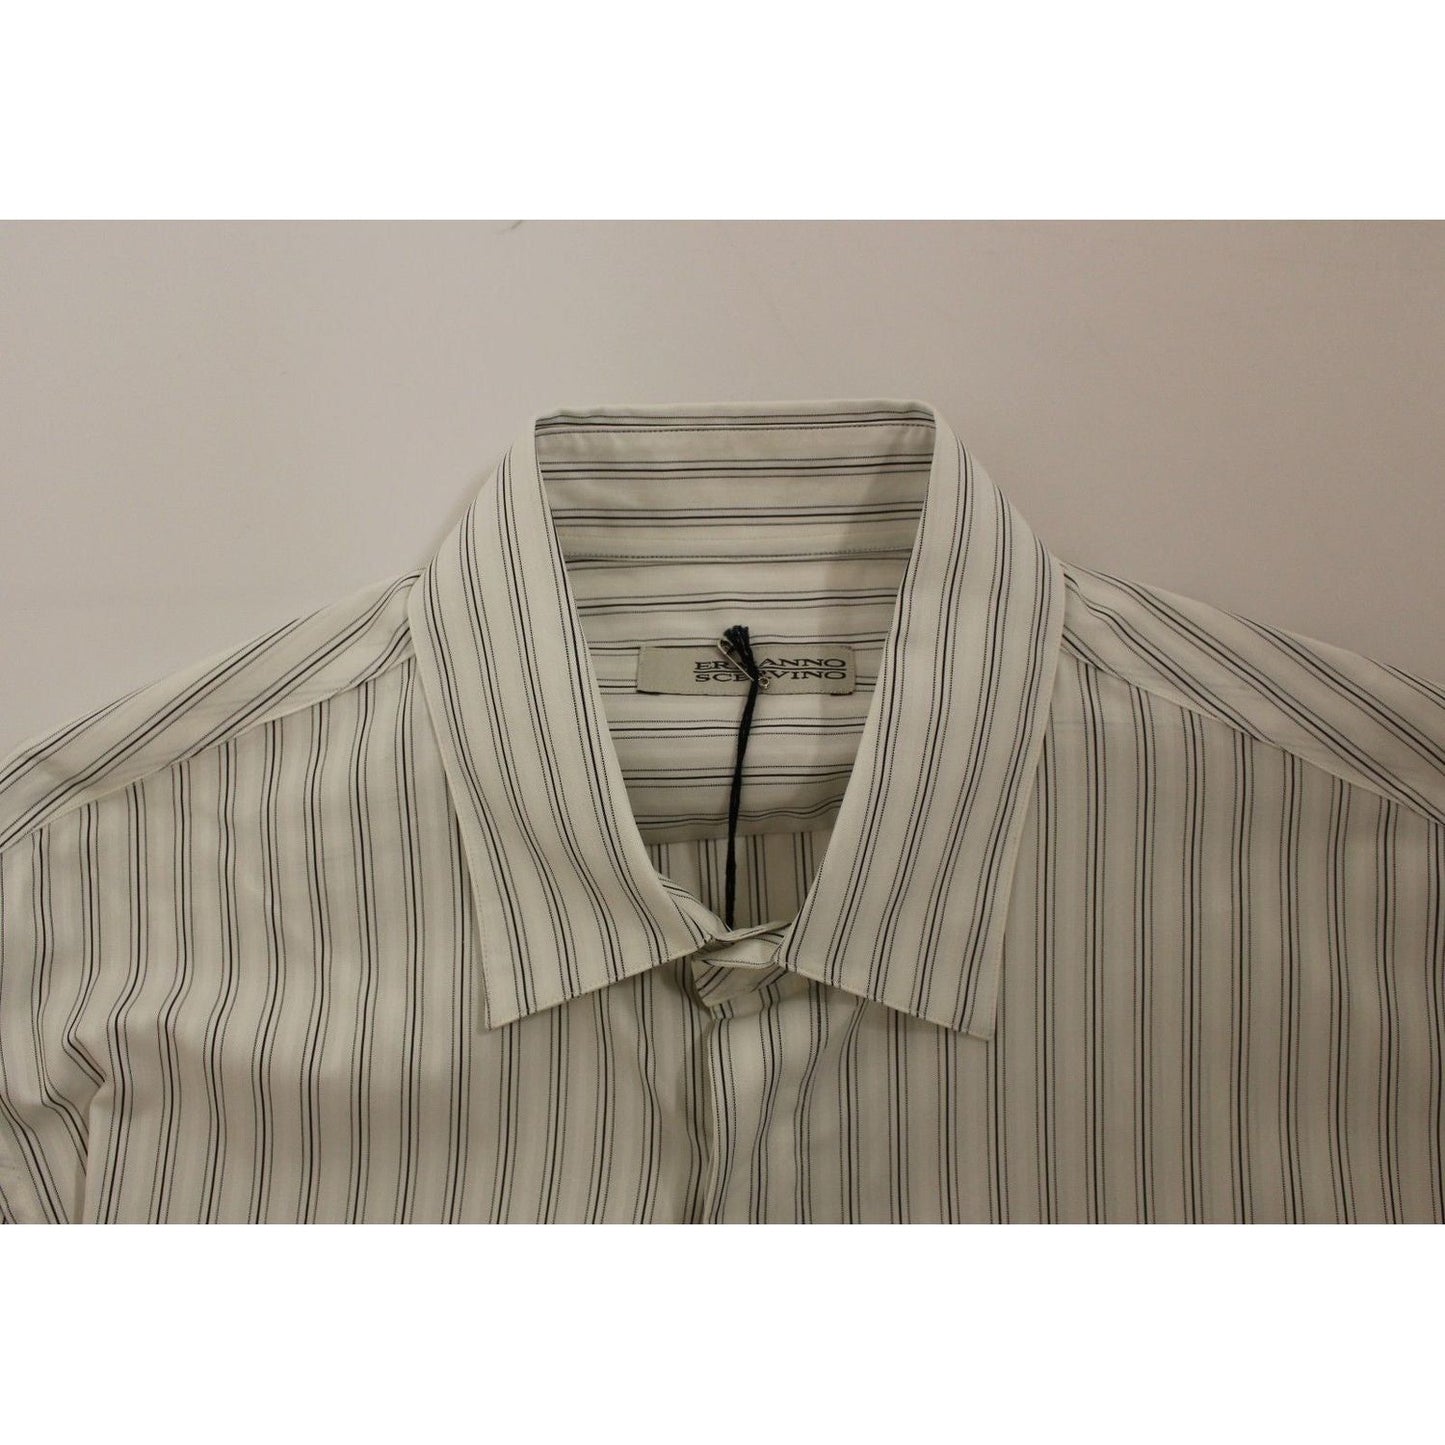 Ermanno Scervino Elegant Striped Cotton Casual Shirt white-black-striped-regular-fit-casual-shirt